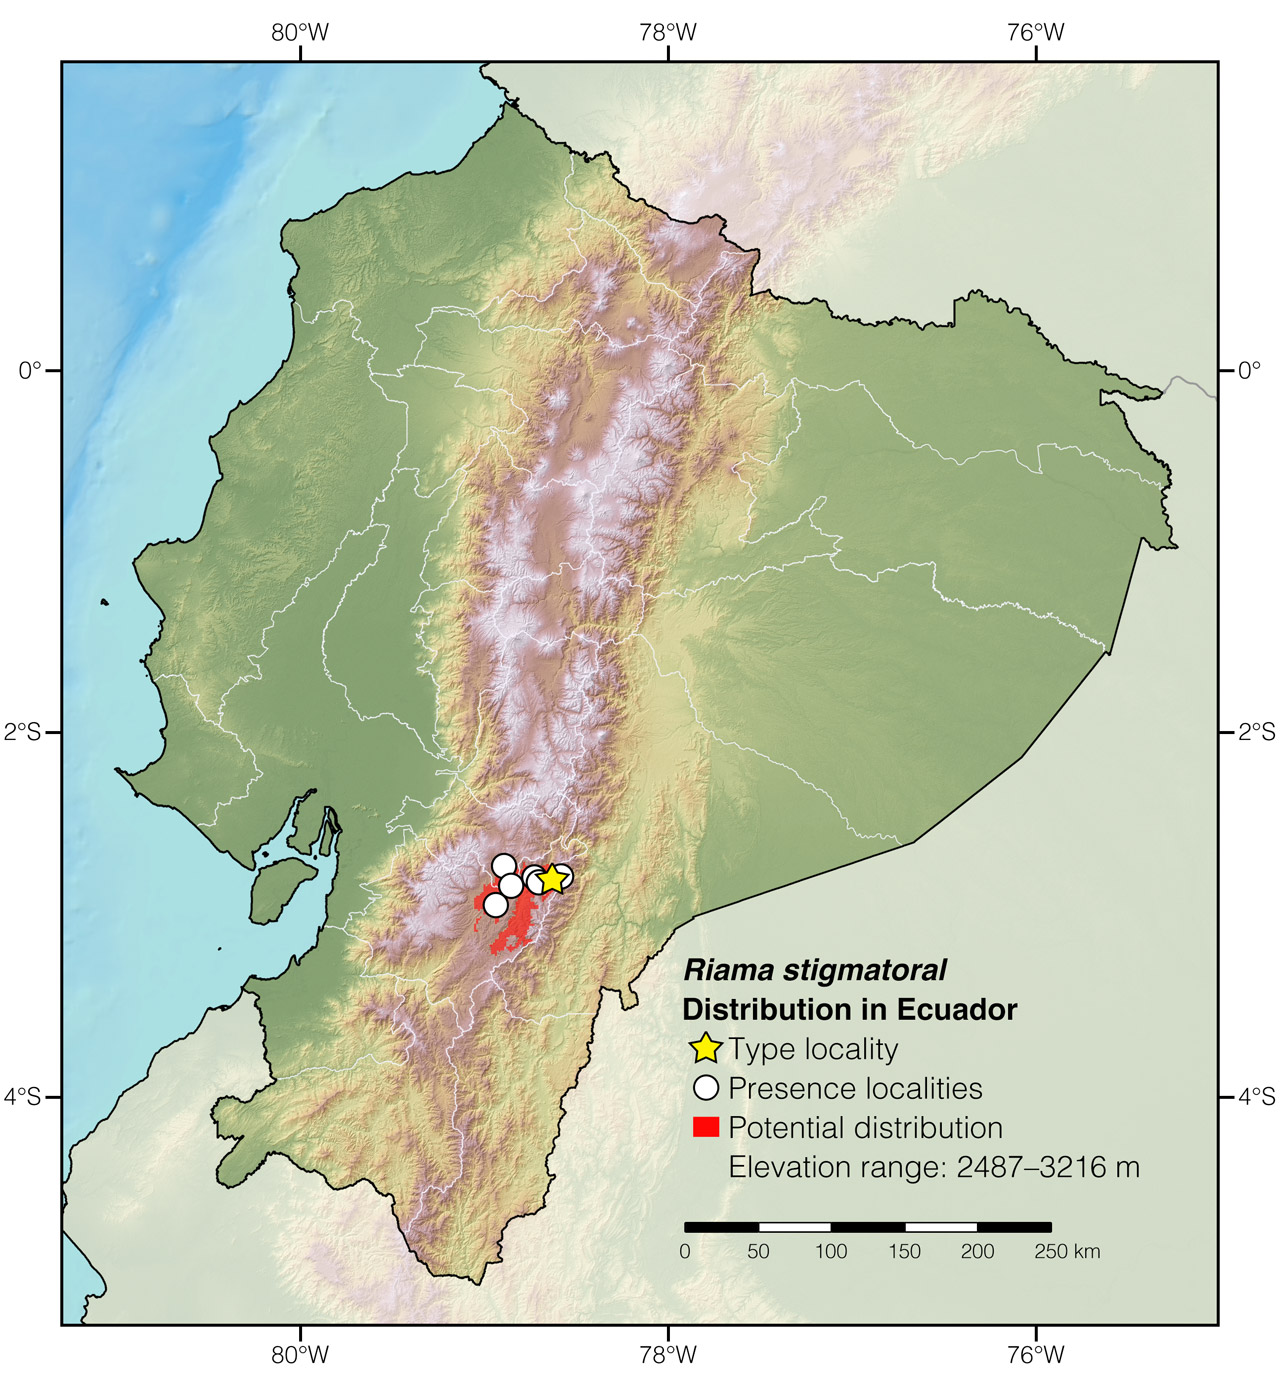 Distribution of Riama stigmatoral in Ecuador